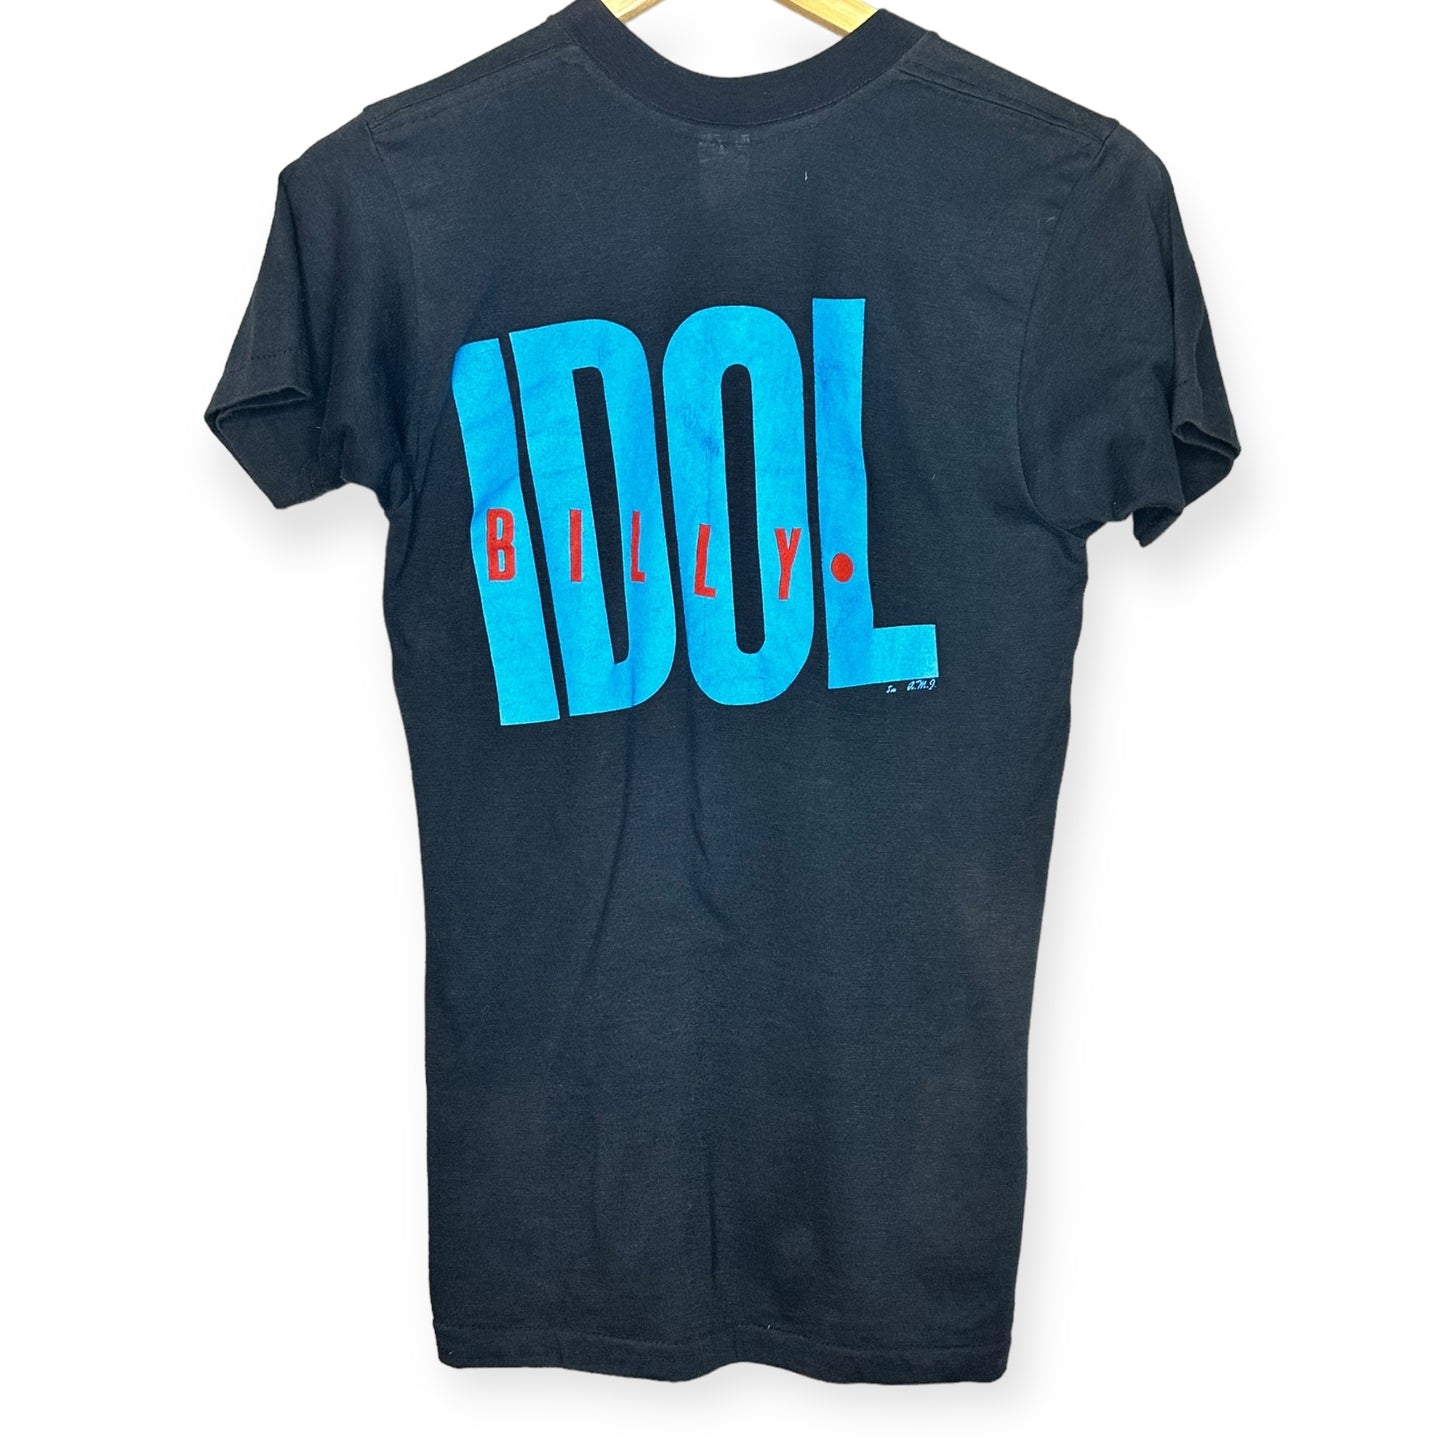 Vintage 1983 Billy Idol T-Shirt S